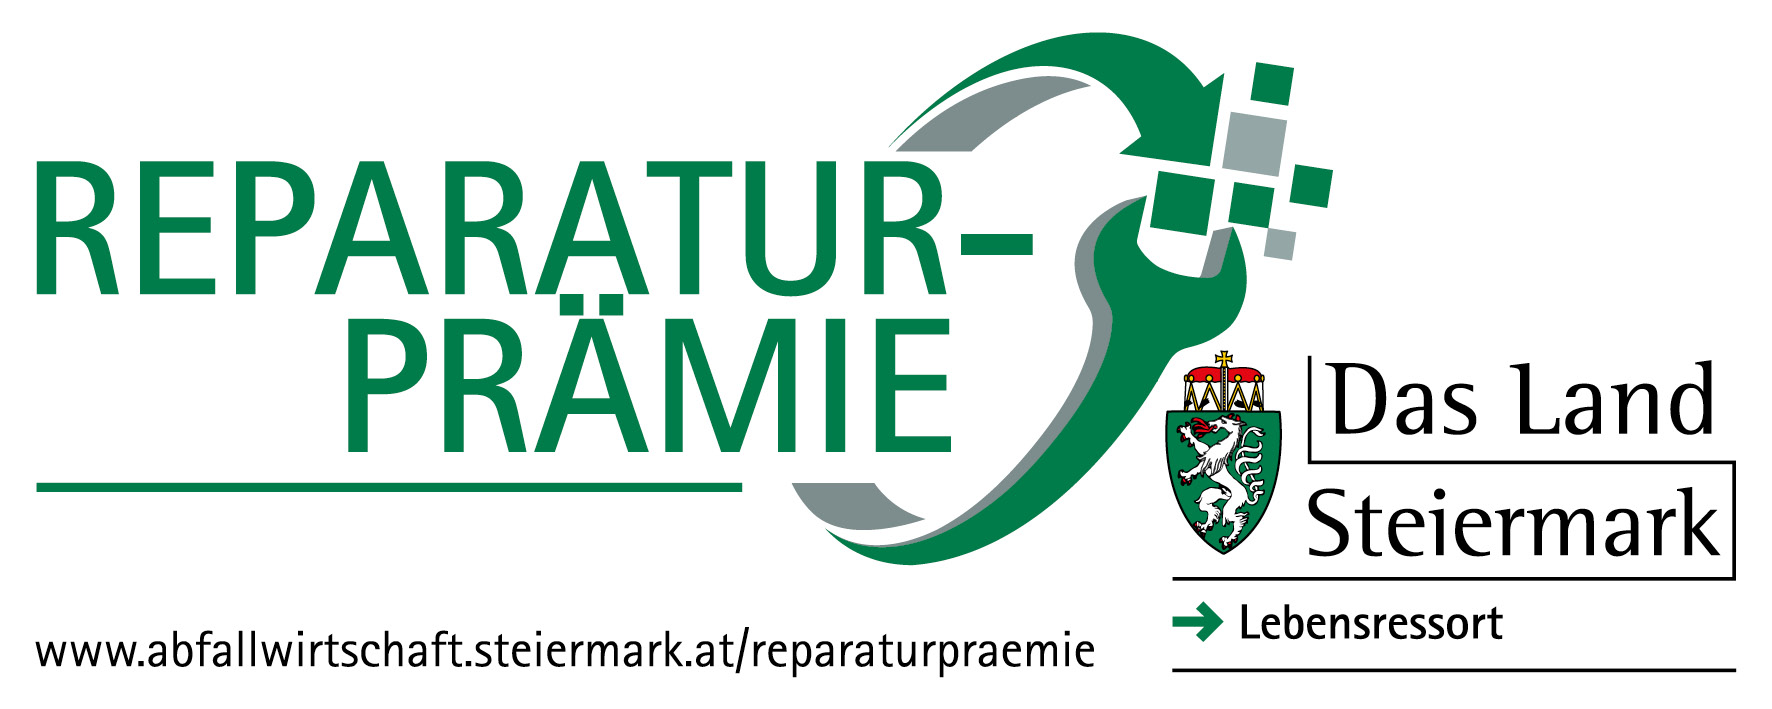 Reparatur-Prämie Steiermark 2019